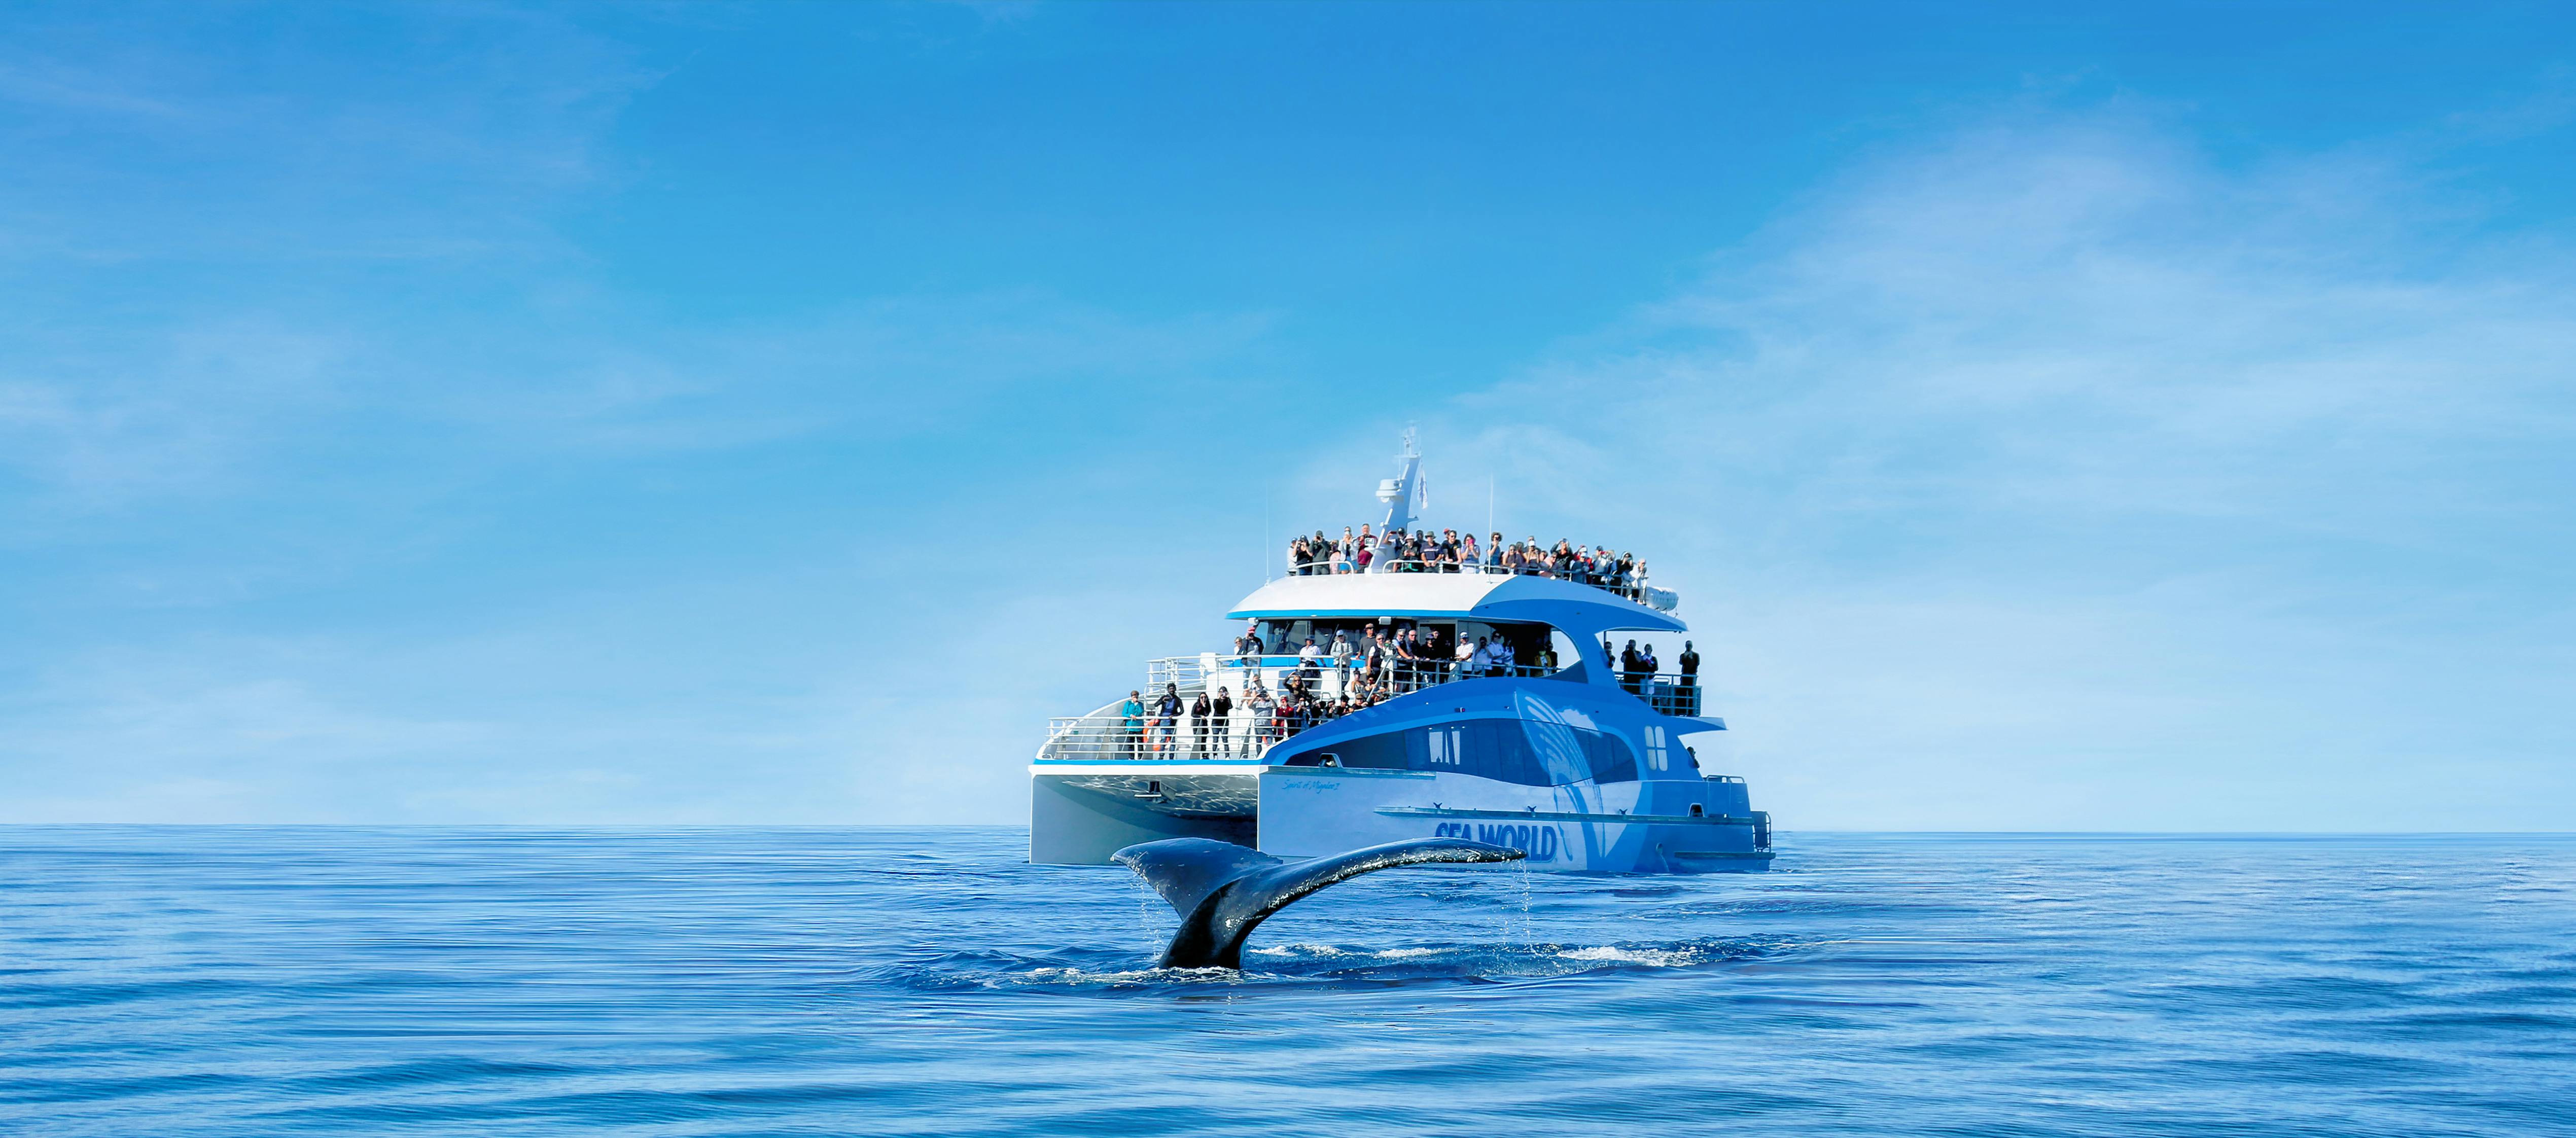 Sea World whale-watching cruise with 100% sighting guarantee Musement